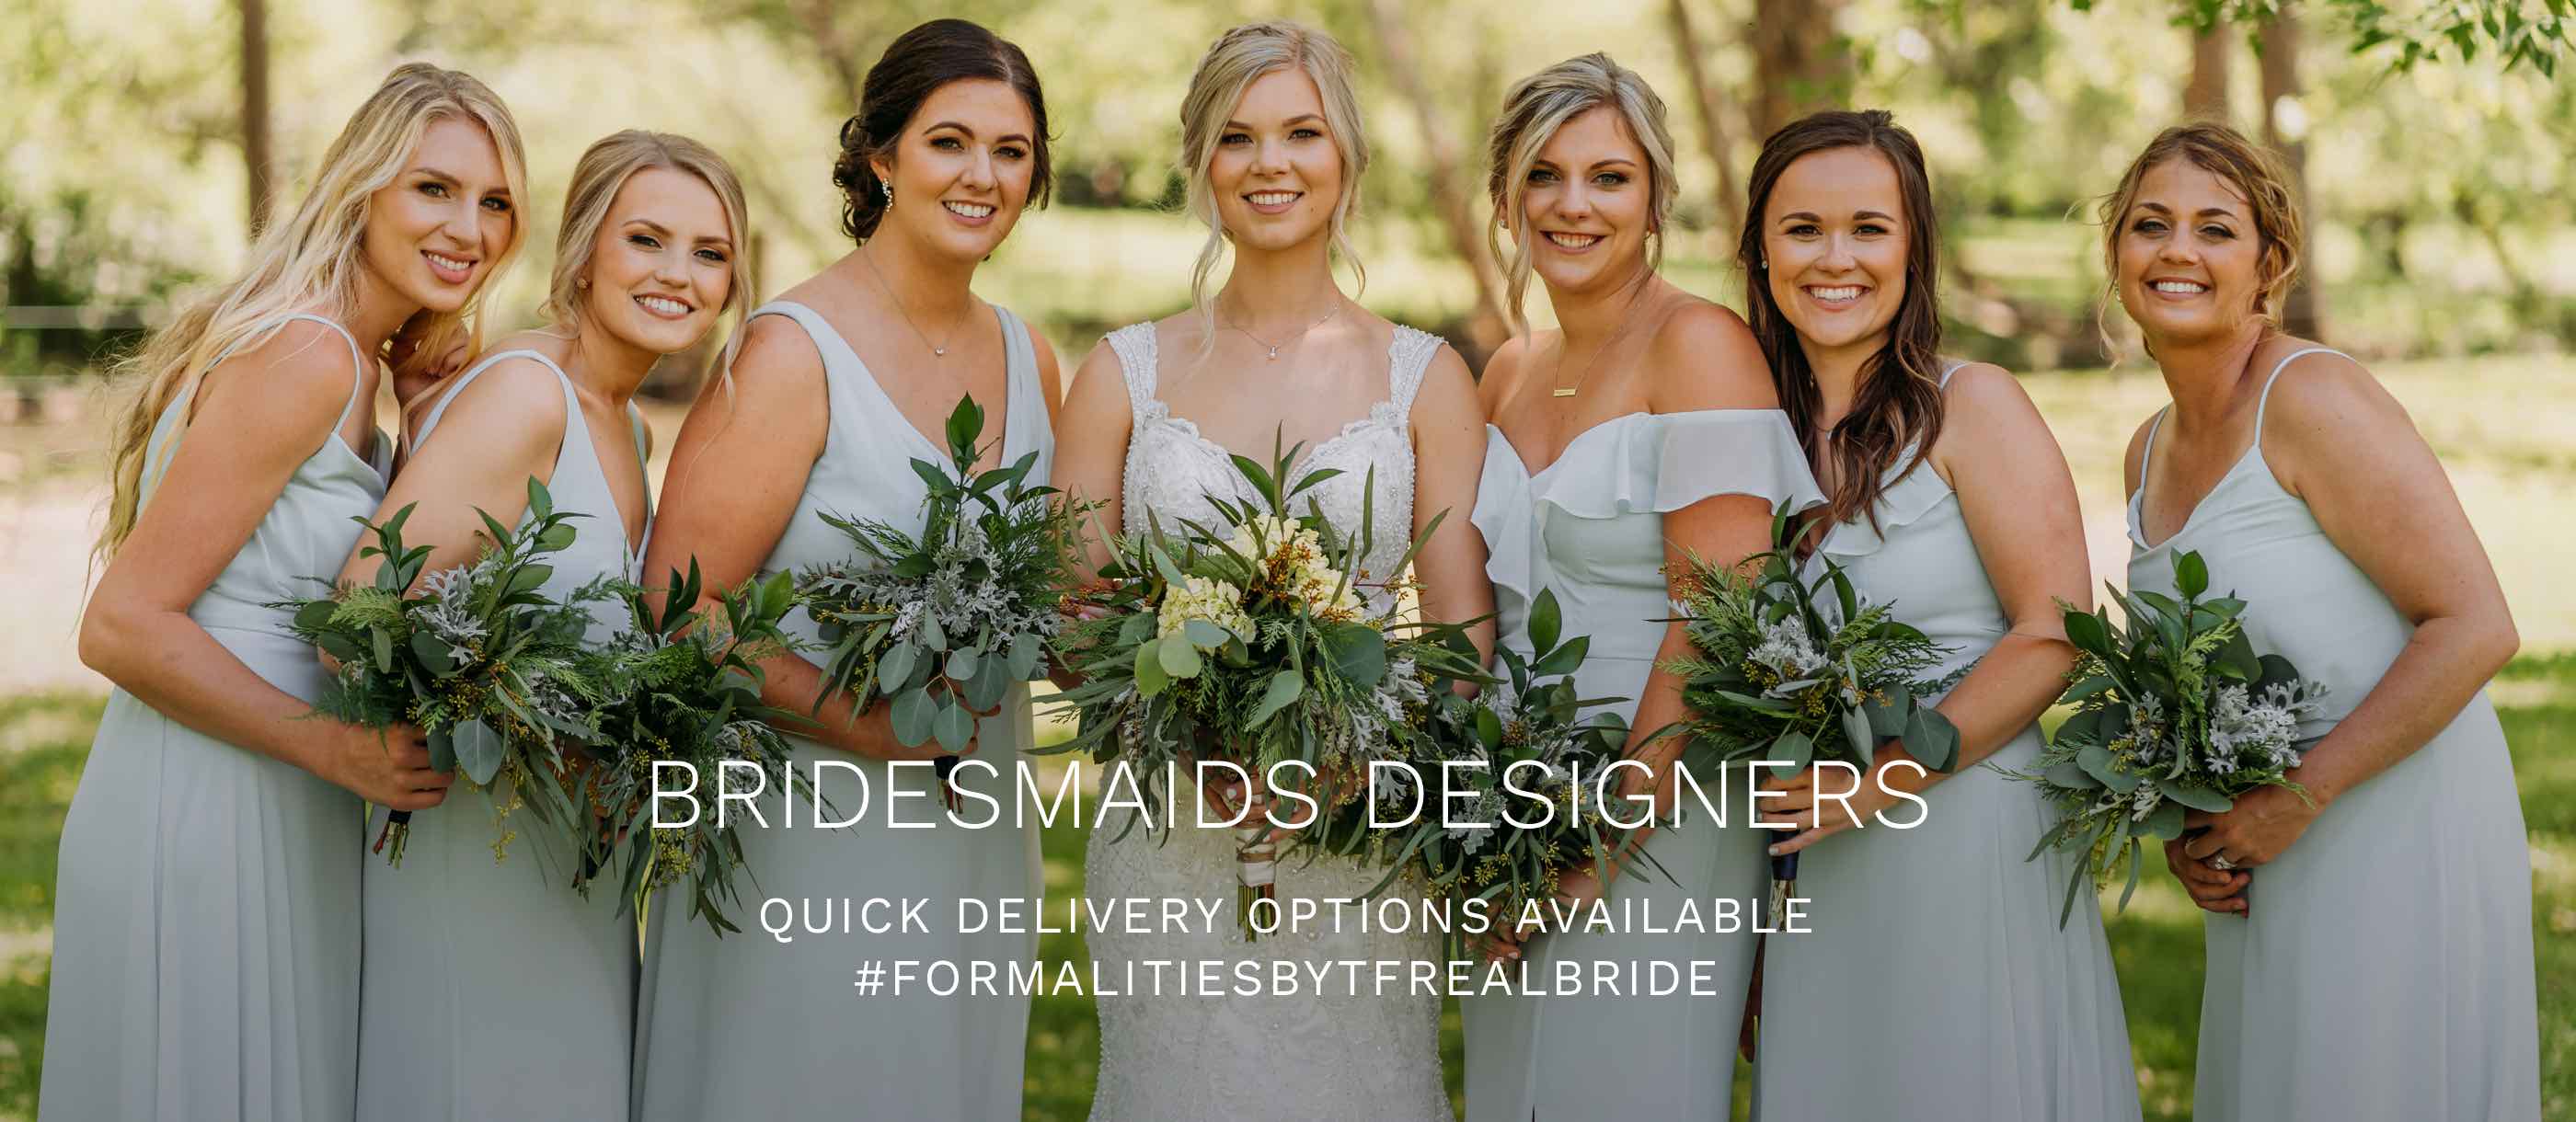 Bridesmaids Designers. Mobile Image.